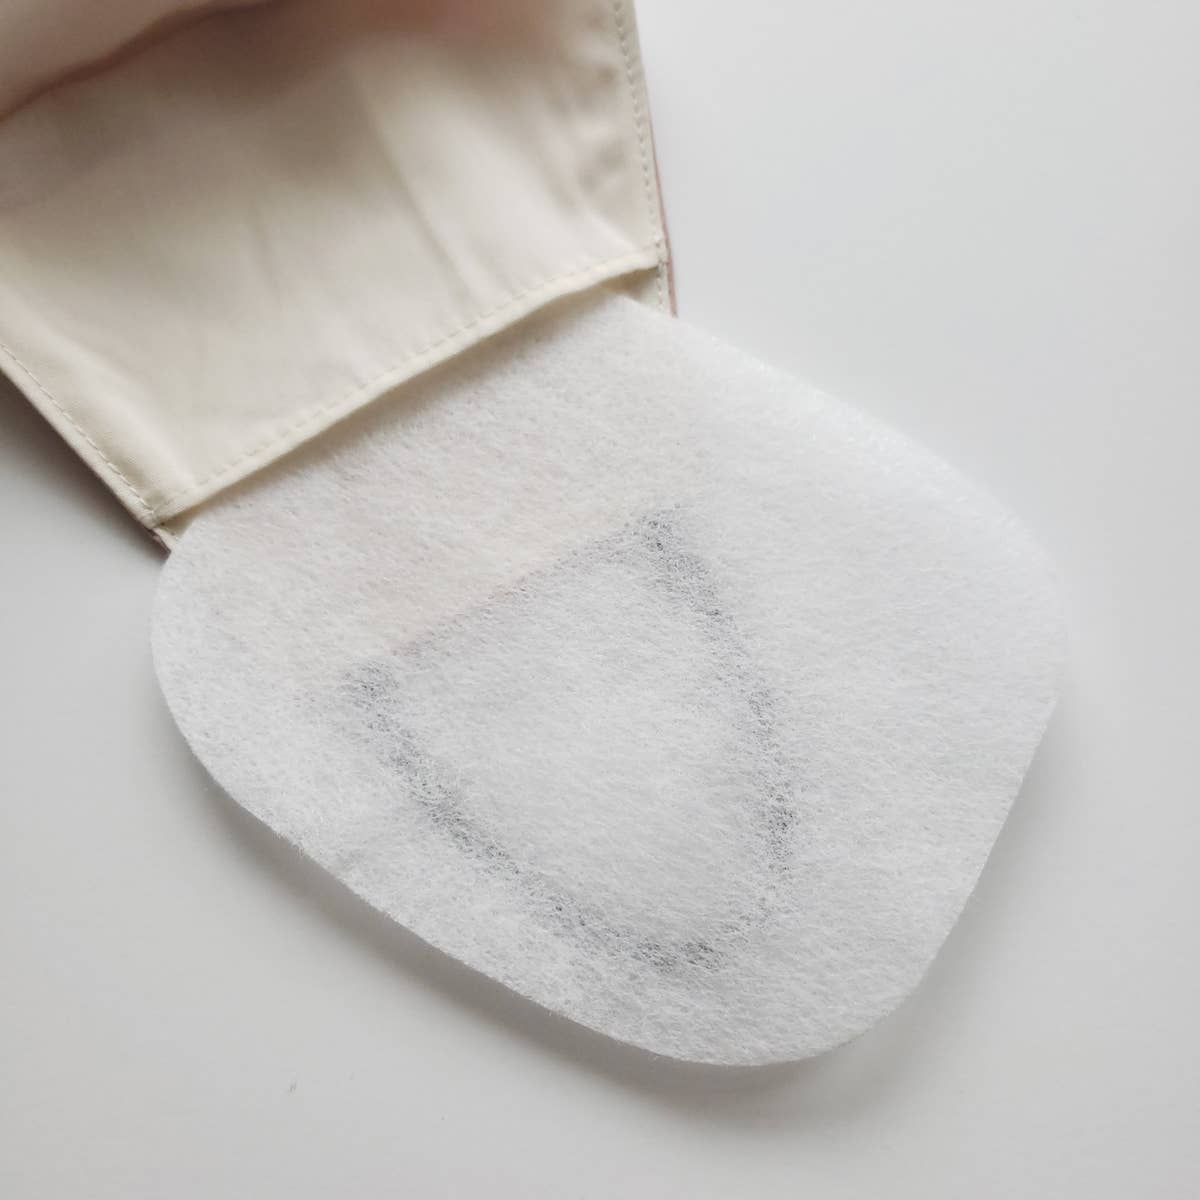 Adult Reusable/Washable Cotton Face Mask - Optional Filter Pocket - 2 colors